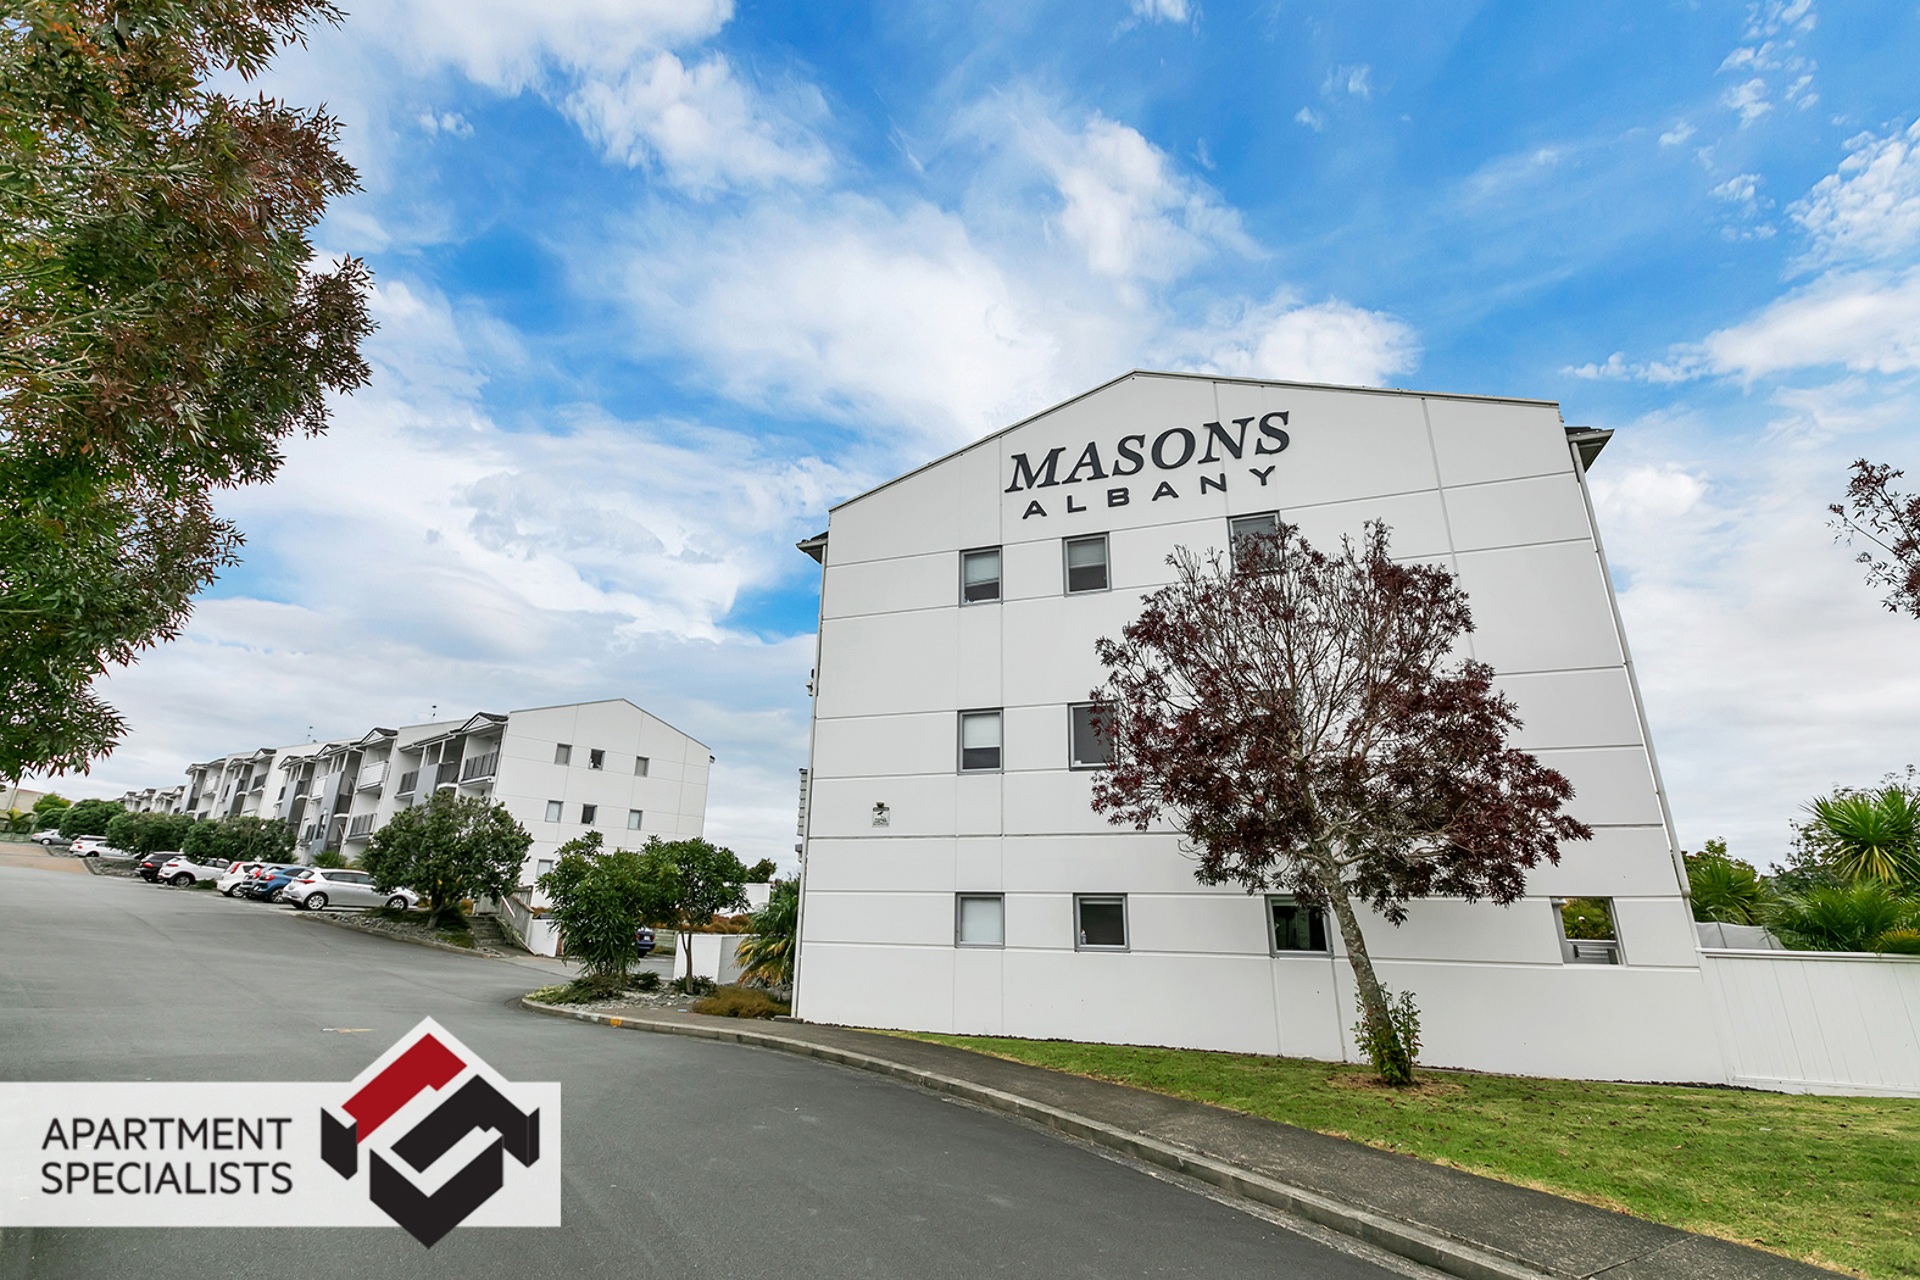 10 | 60 Masons Road, Albany | Apartment Specialists